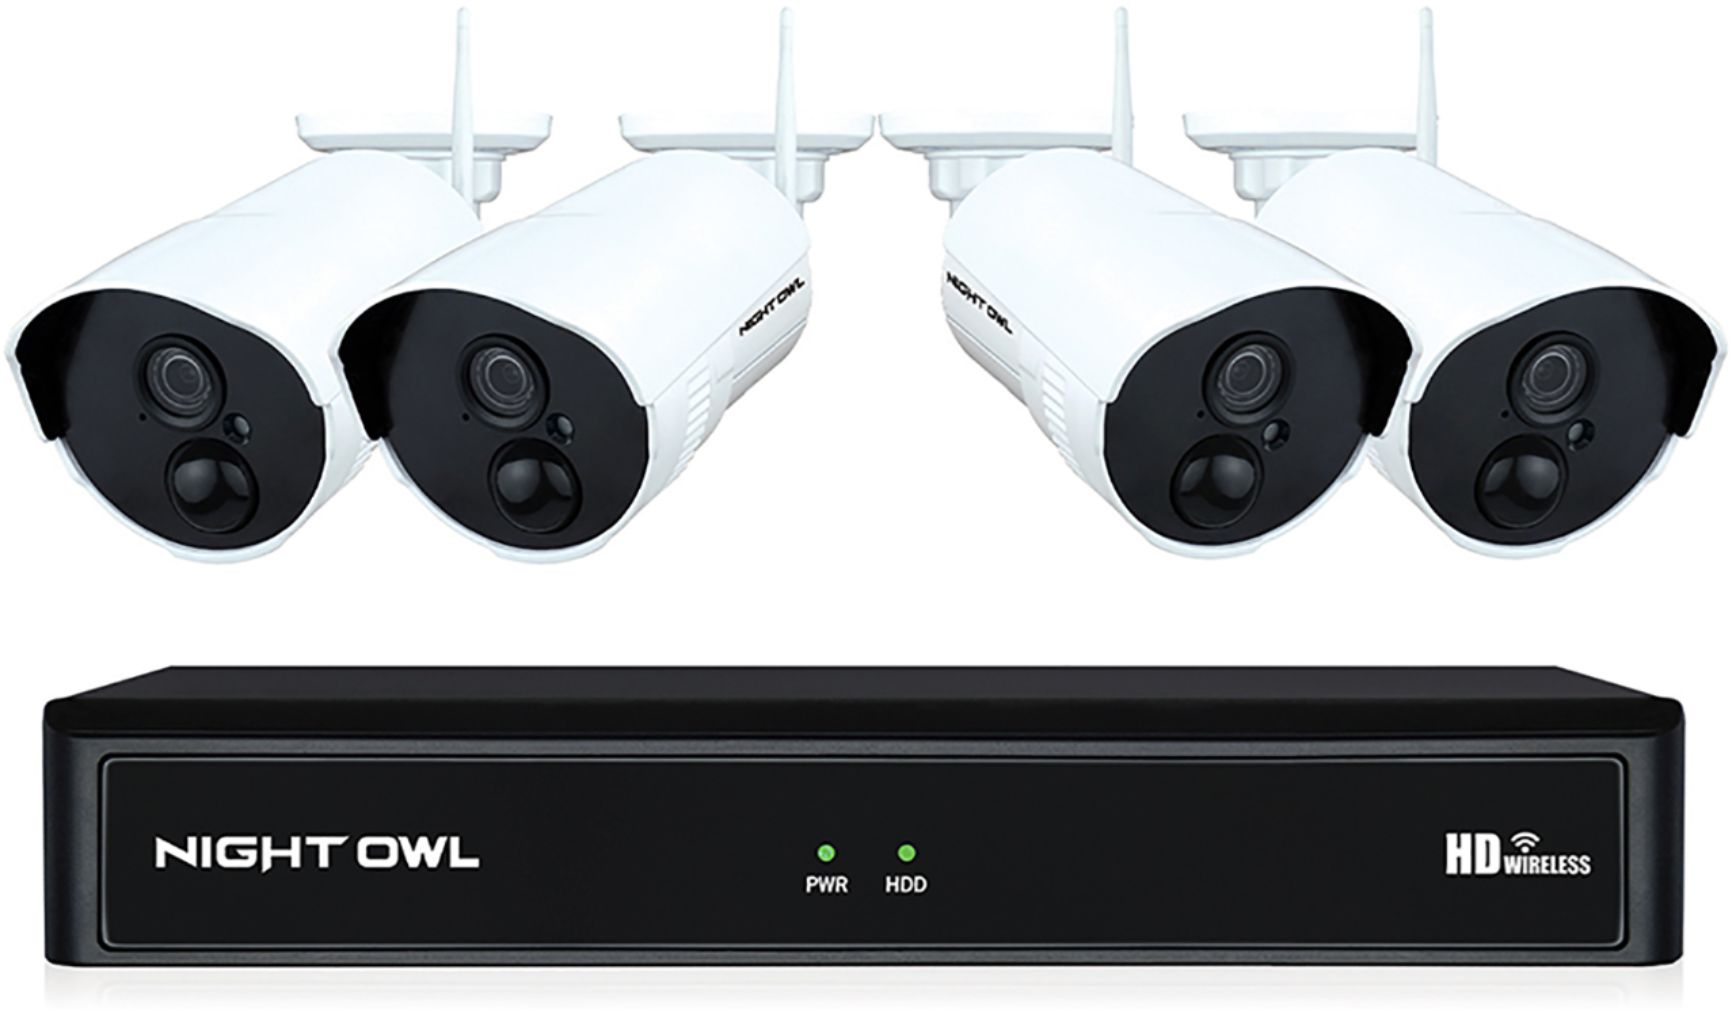 night owl night vision security camera